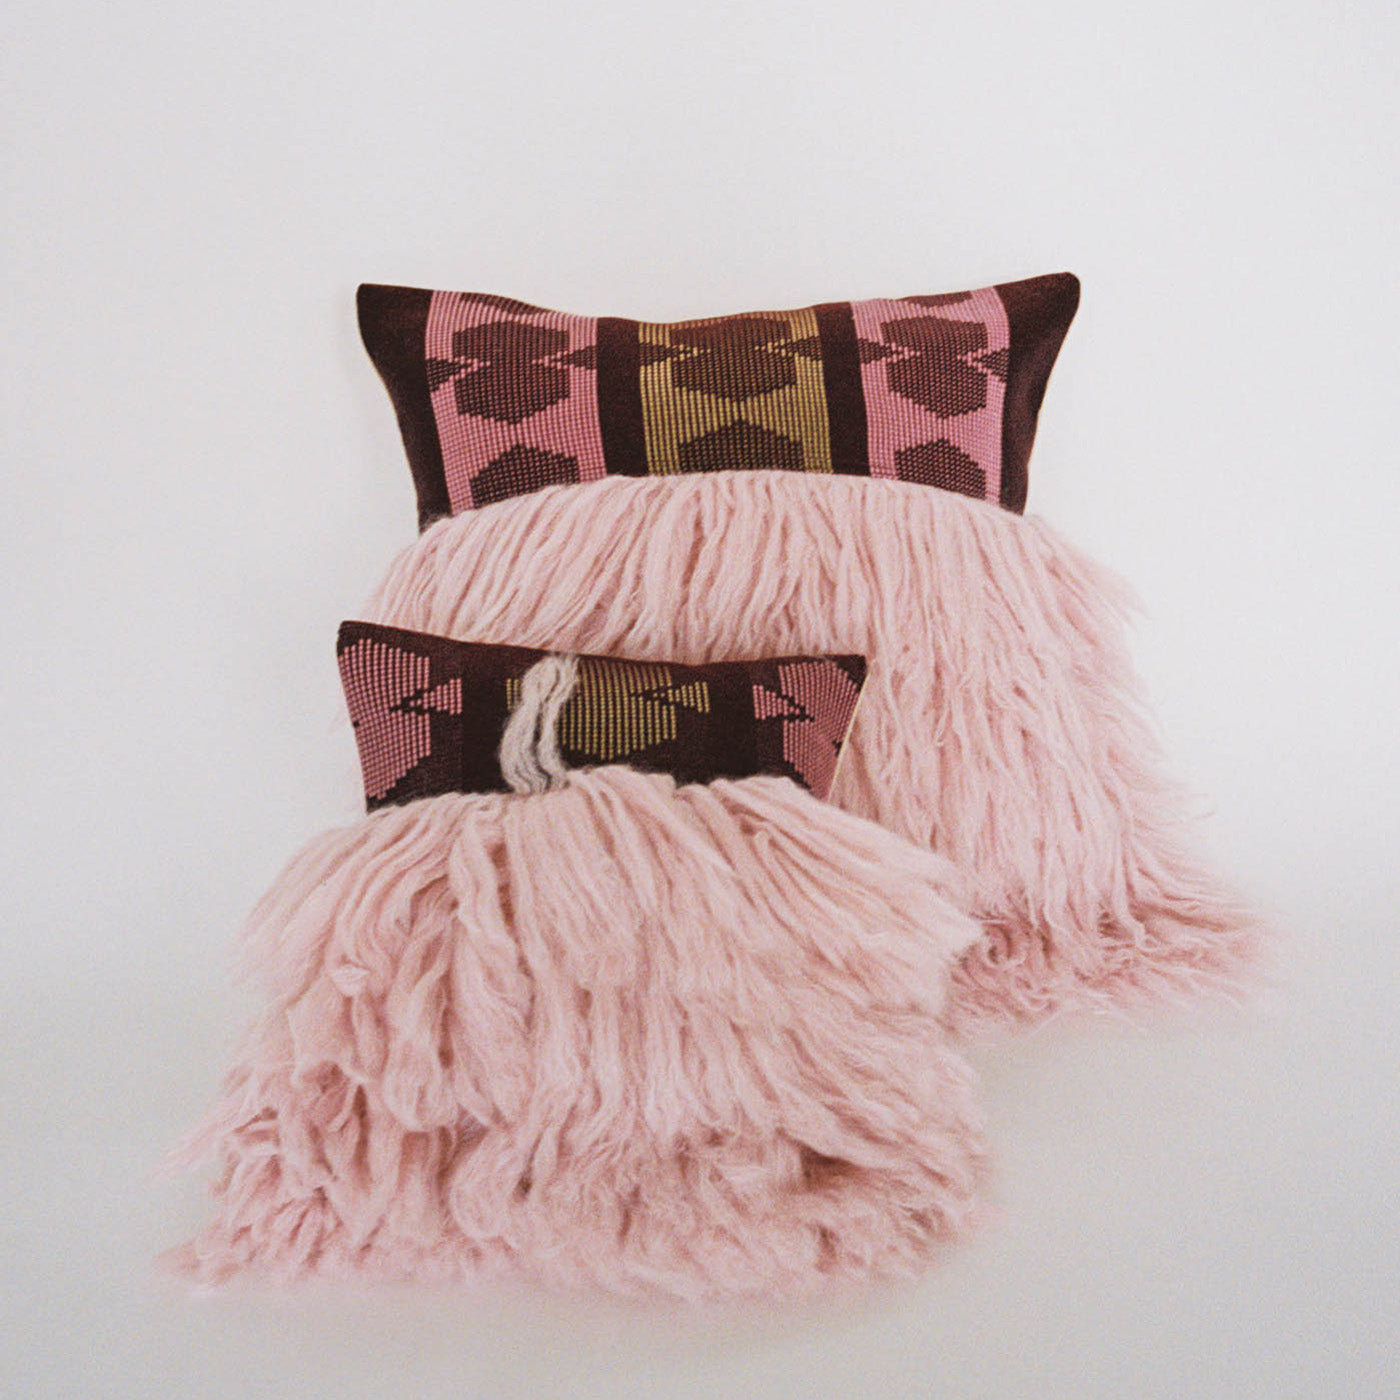 Textured Pink Geometric Throw Pillow